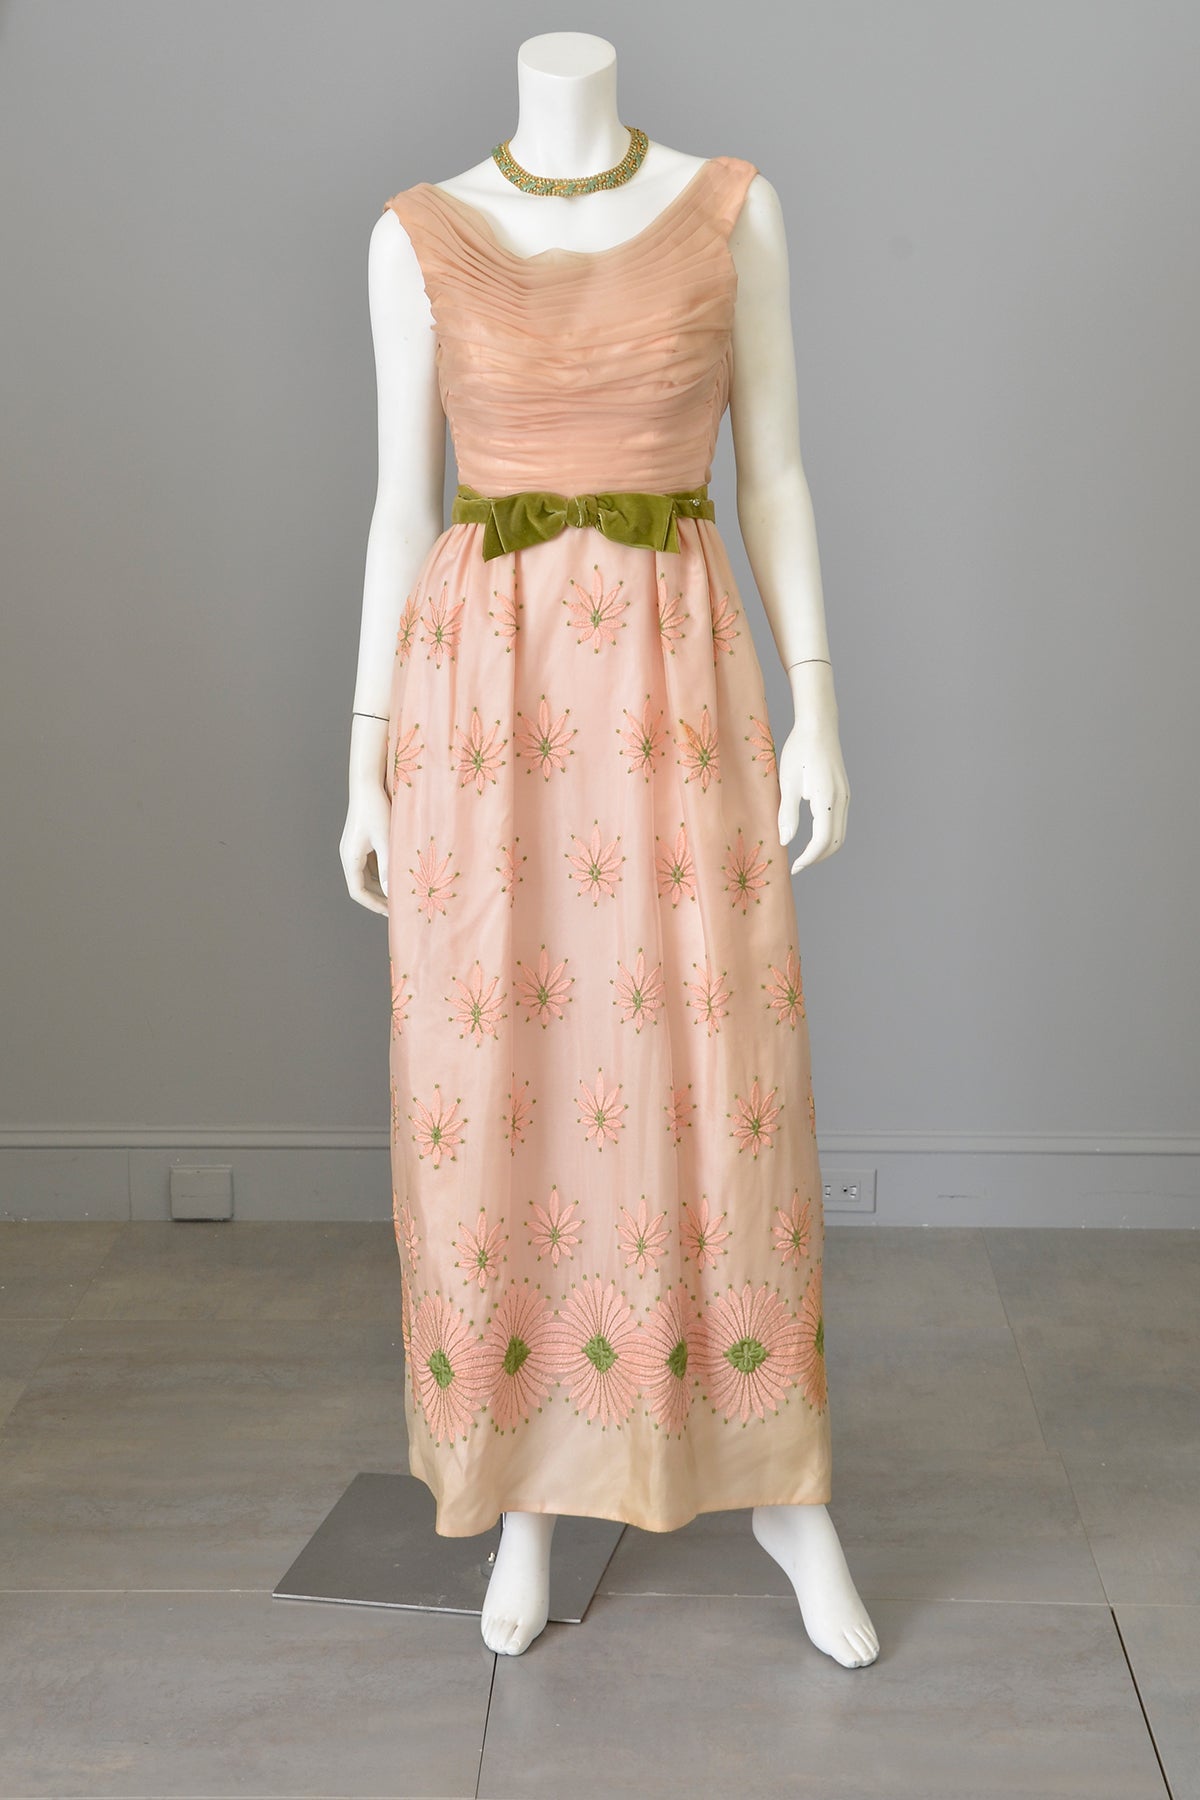 1960s prom dresses